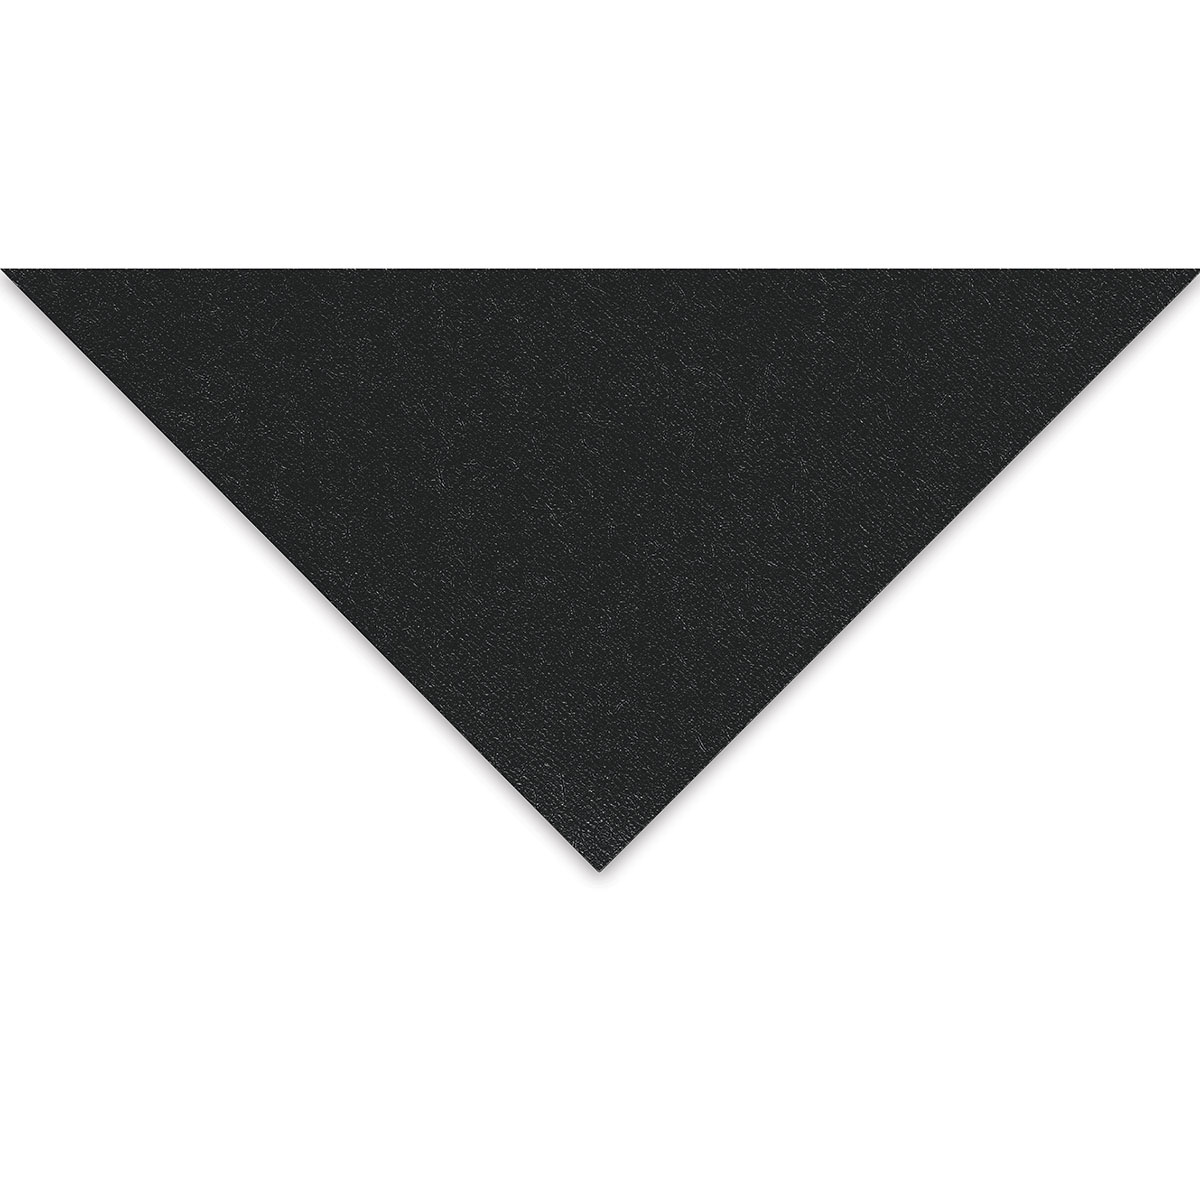 Fabriano Black Black Paper Sheets